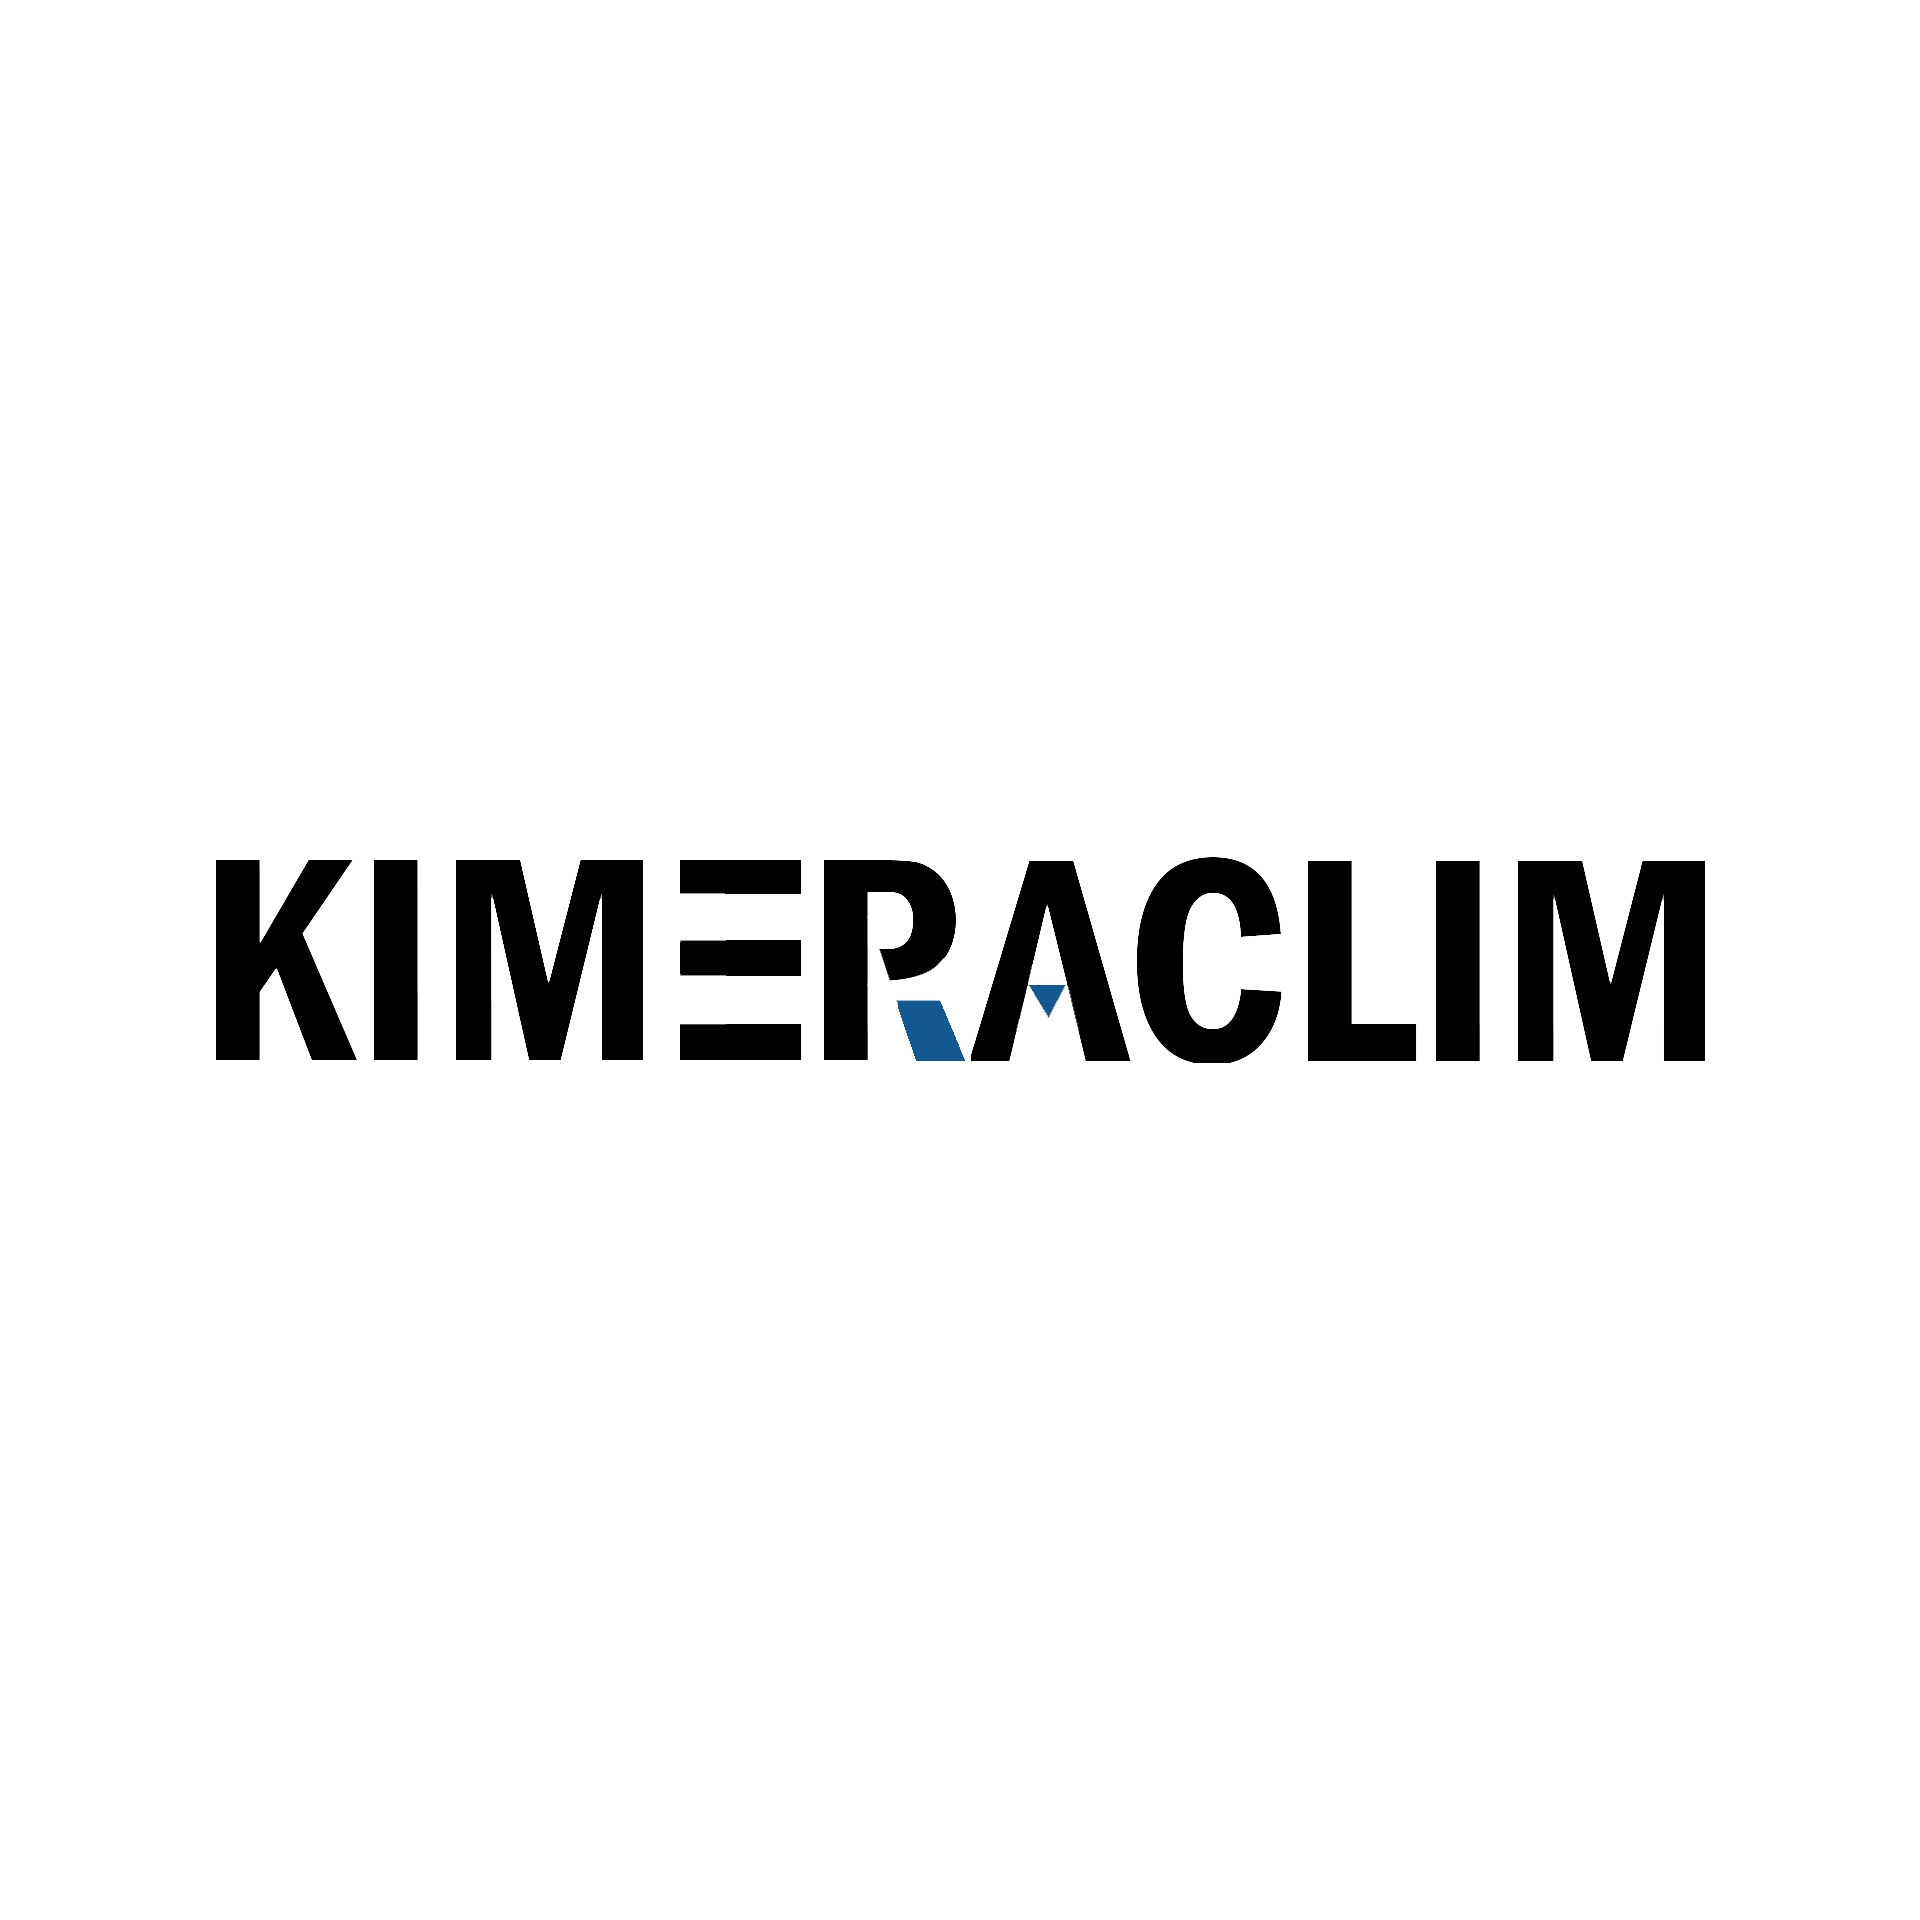 Kimera Climatisation Inc. - Thermopompe, Chauffage, Air climatisé